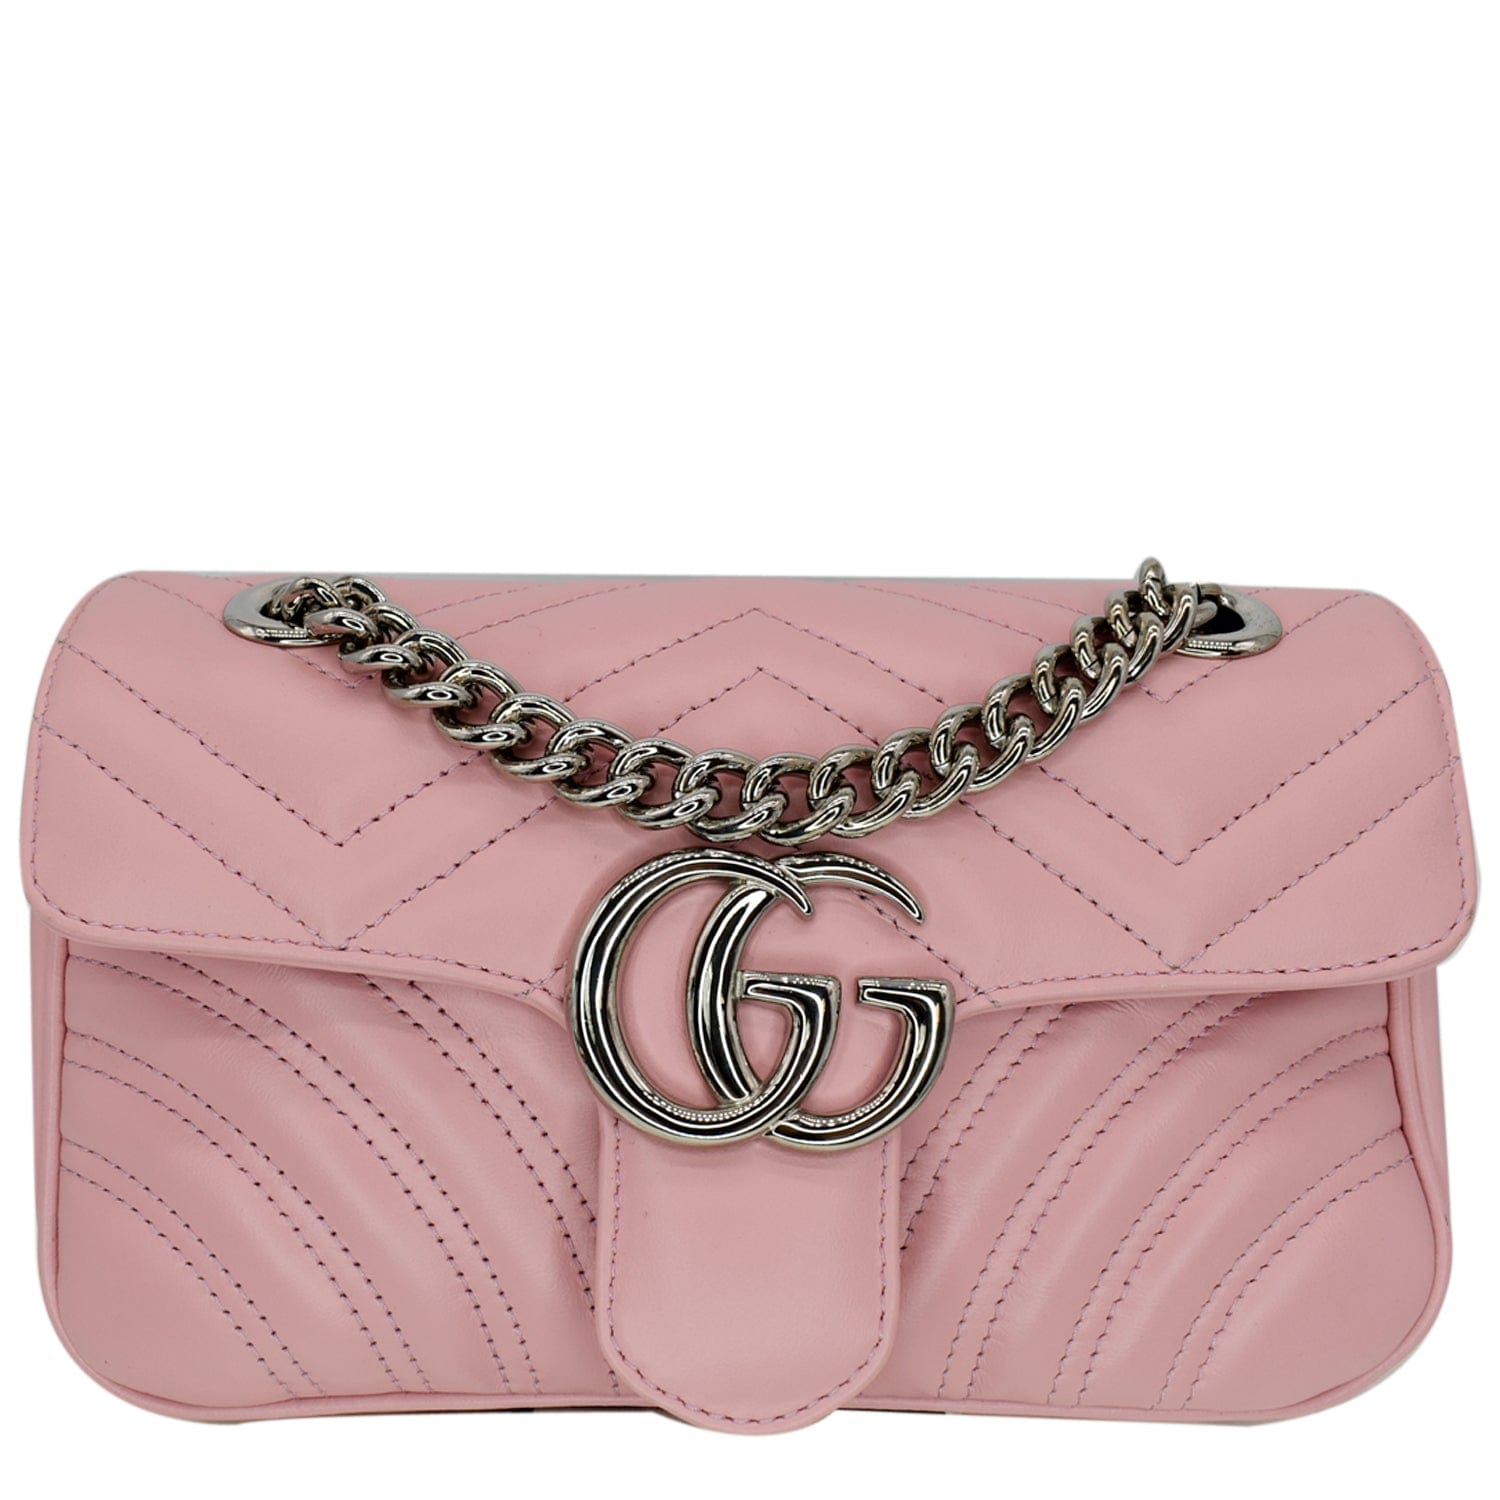 Gucci GG Marmont Mini Camera Bag in Pastel Pink Matelassé Calfskin - SOLD